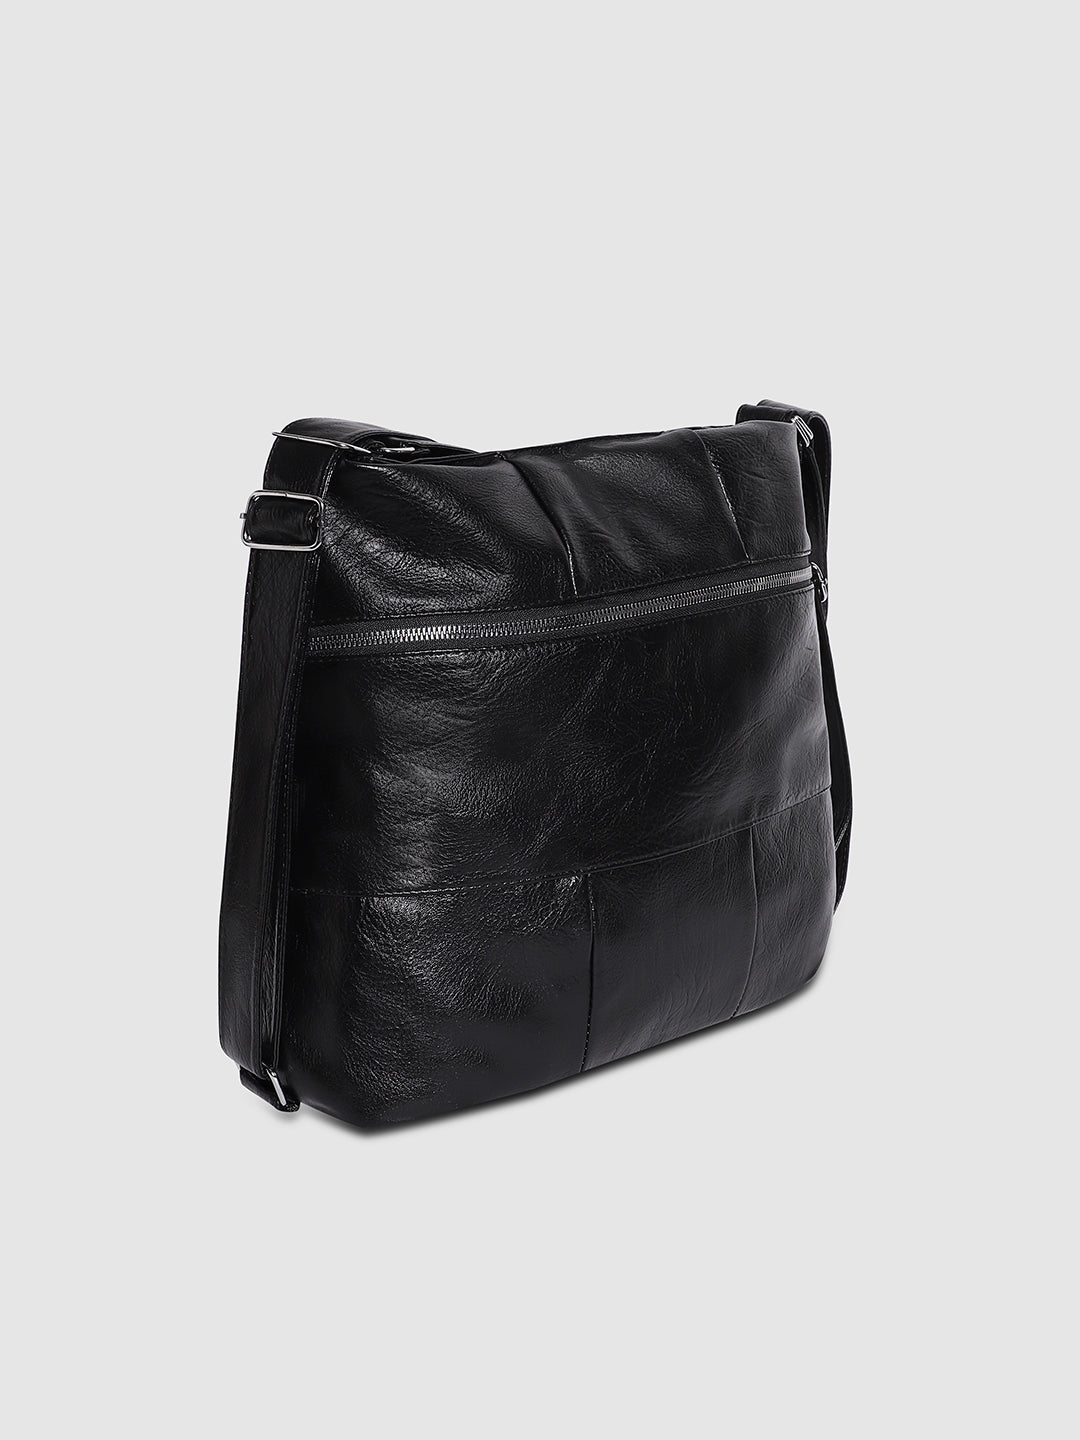 Urban Utility Handbag - Black